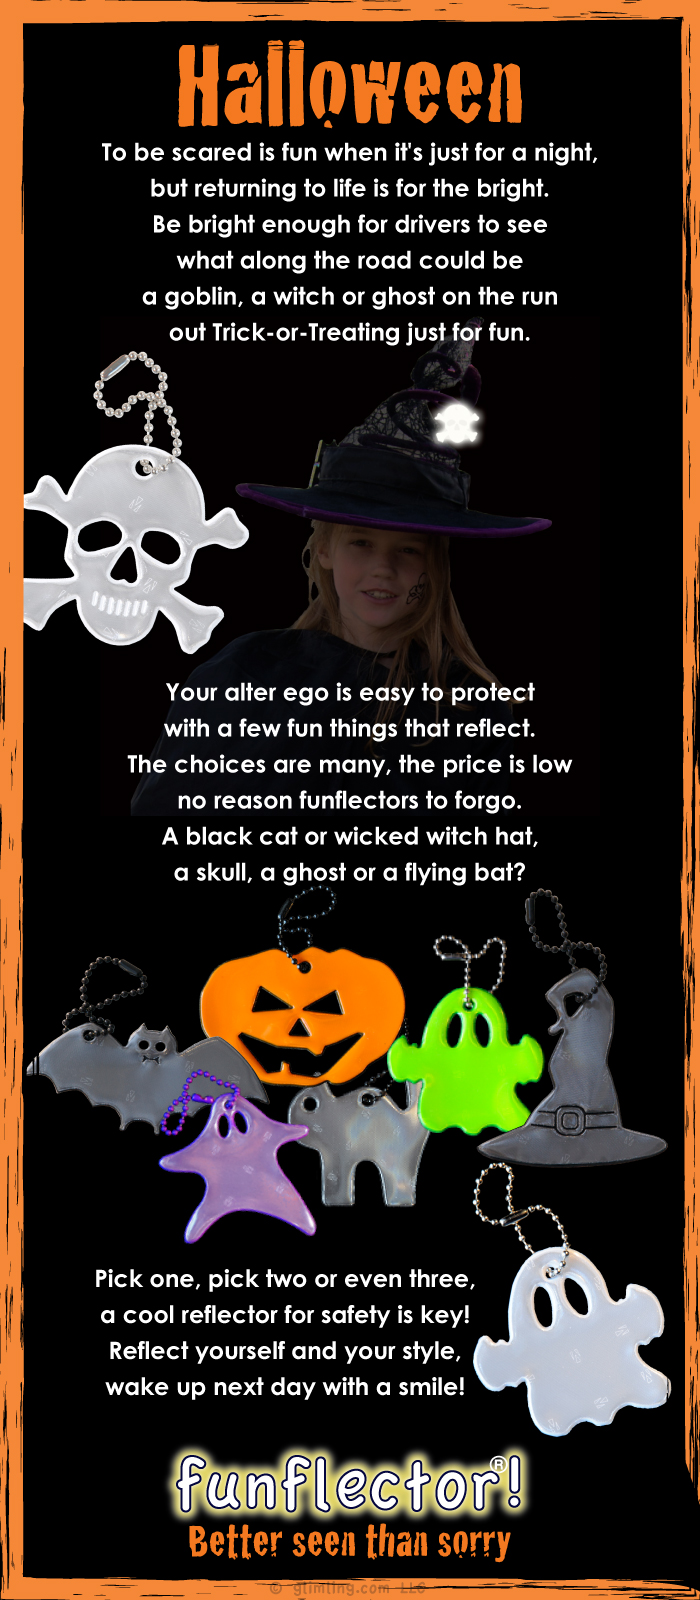 Halloween safety tips poem